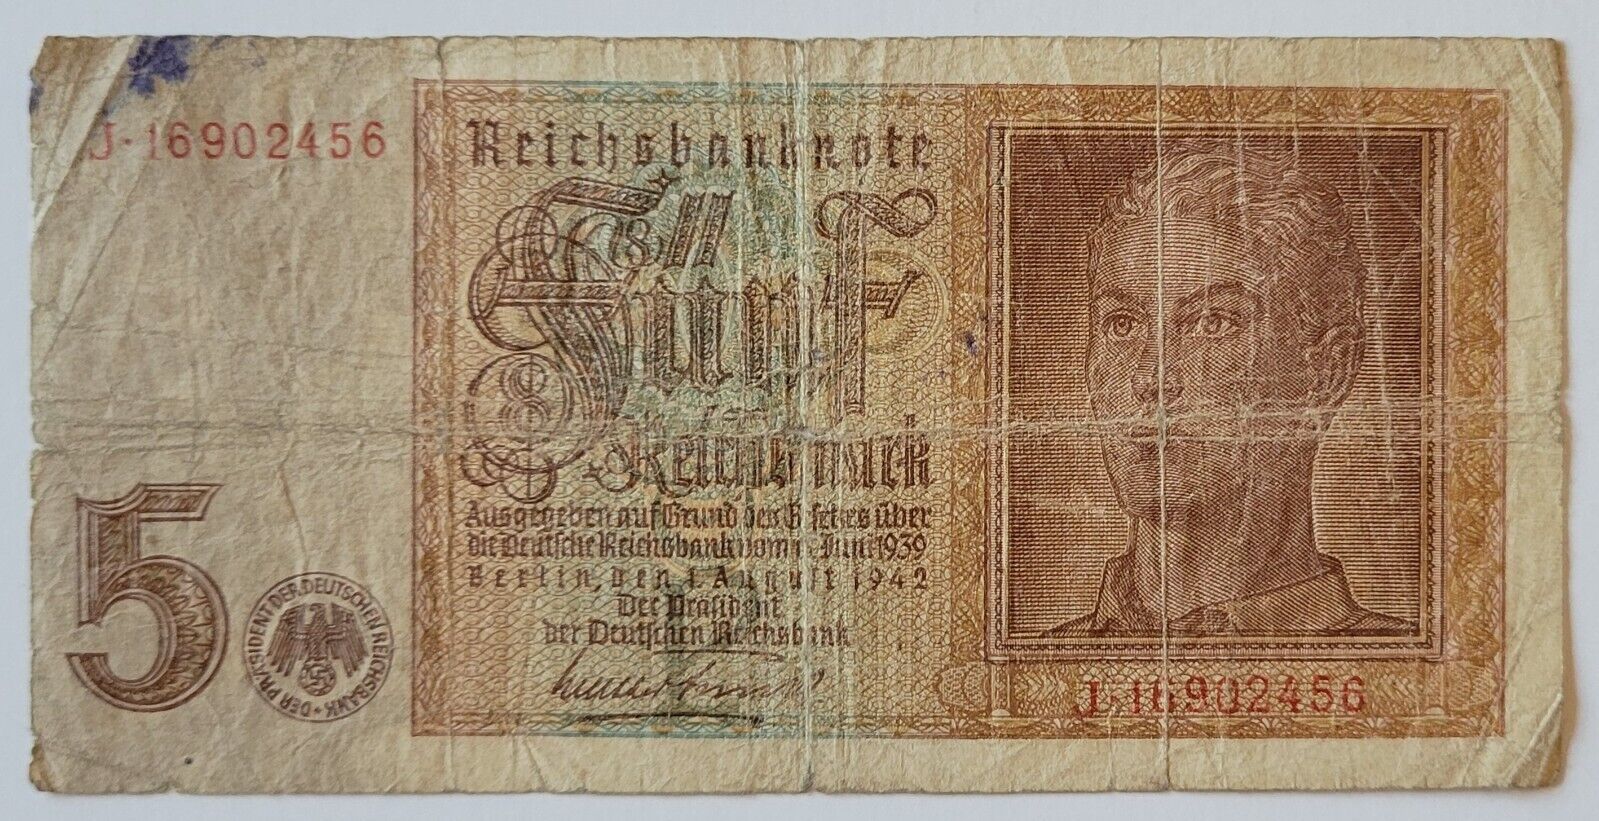 GERMANY 5 MARK REICHSBANKNOTE 1942 VERY RARE NO RESERVE - $18.46